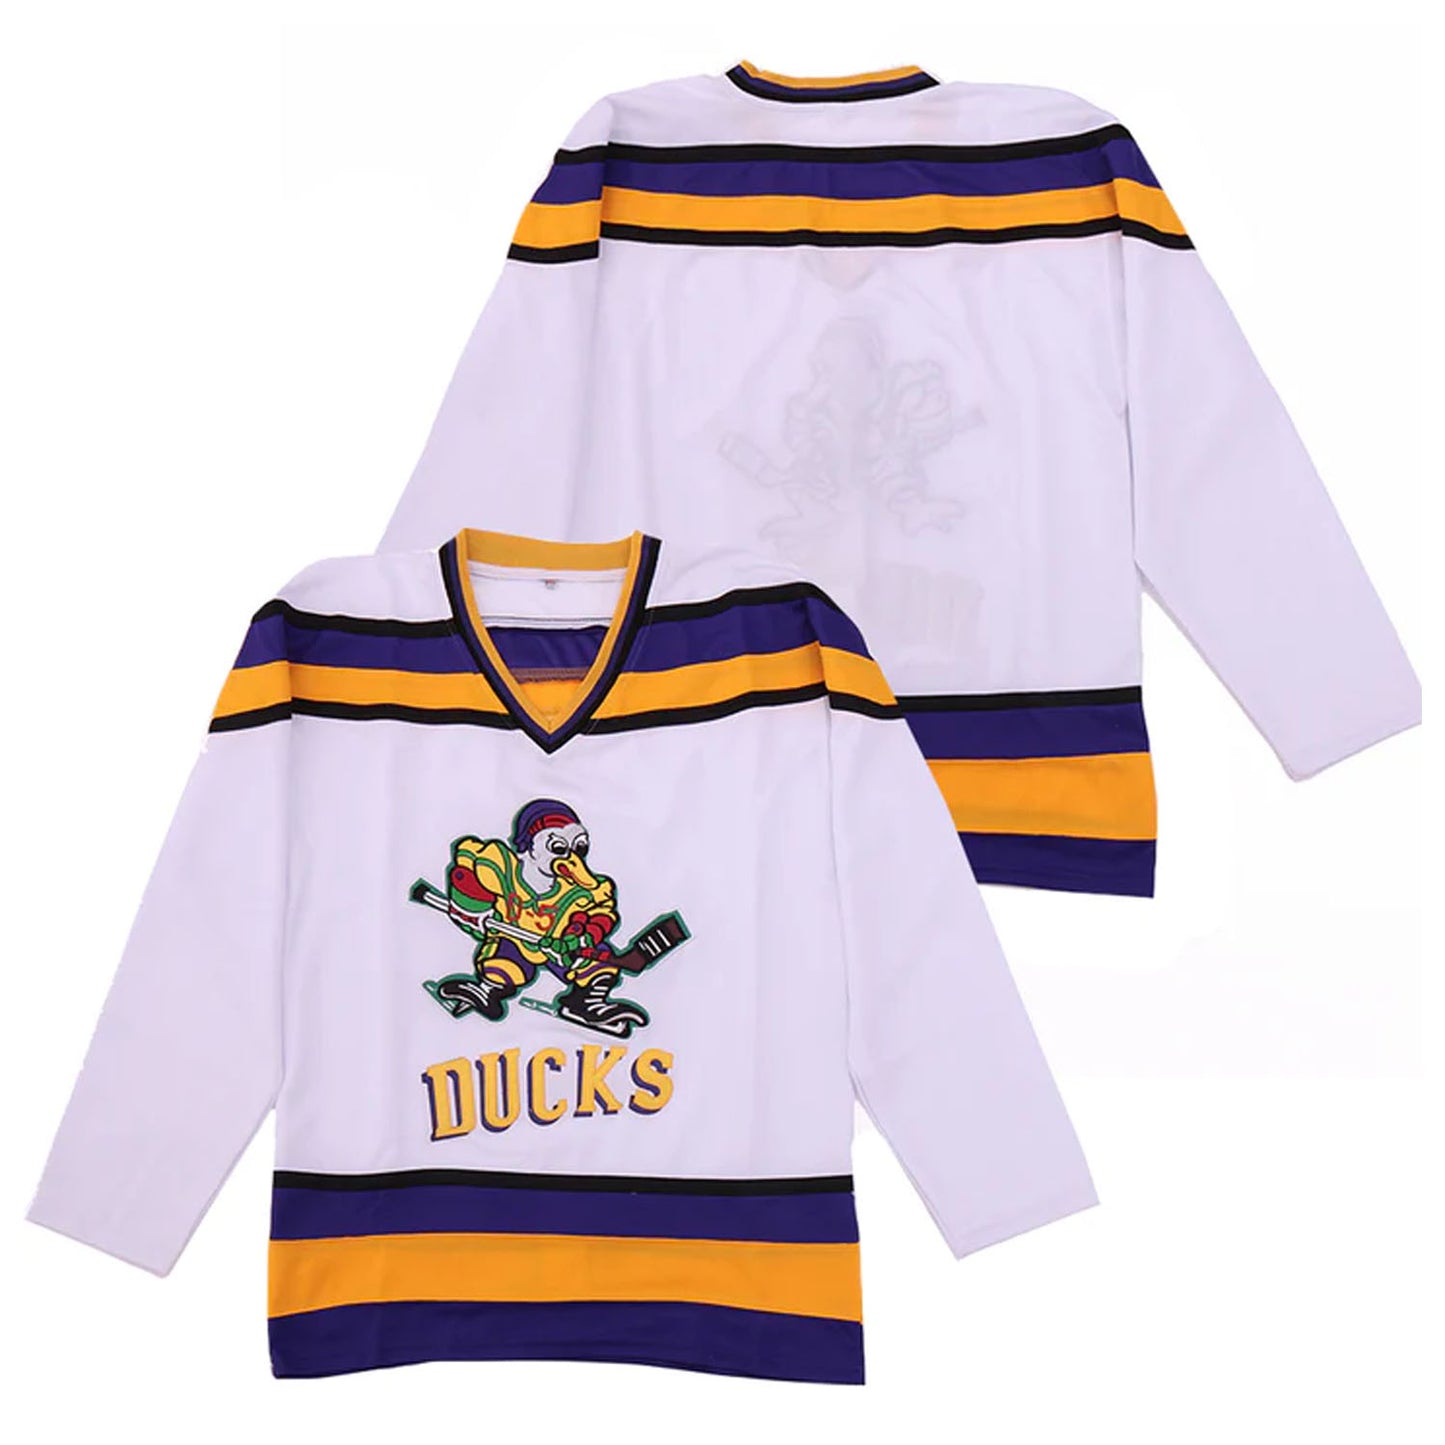 Mighty Ducks Team Jersey